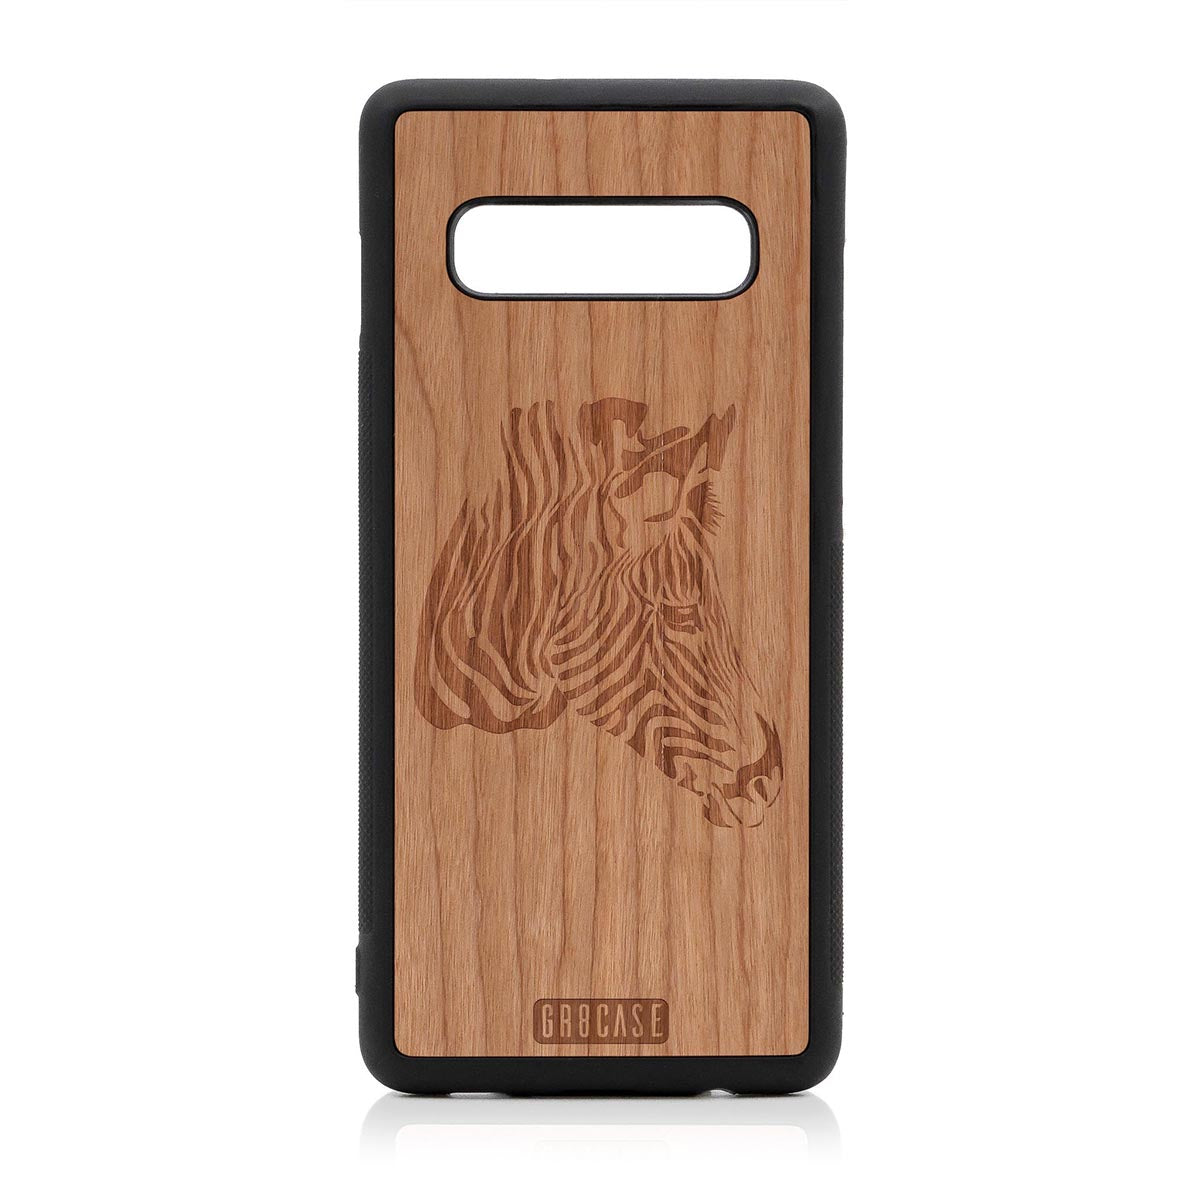 Zebra Design Wood Case For Samsung Galaxy S10 Plus